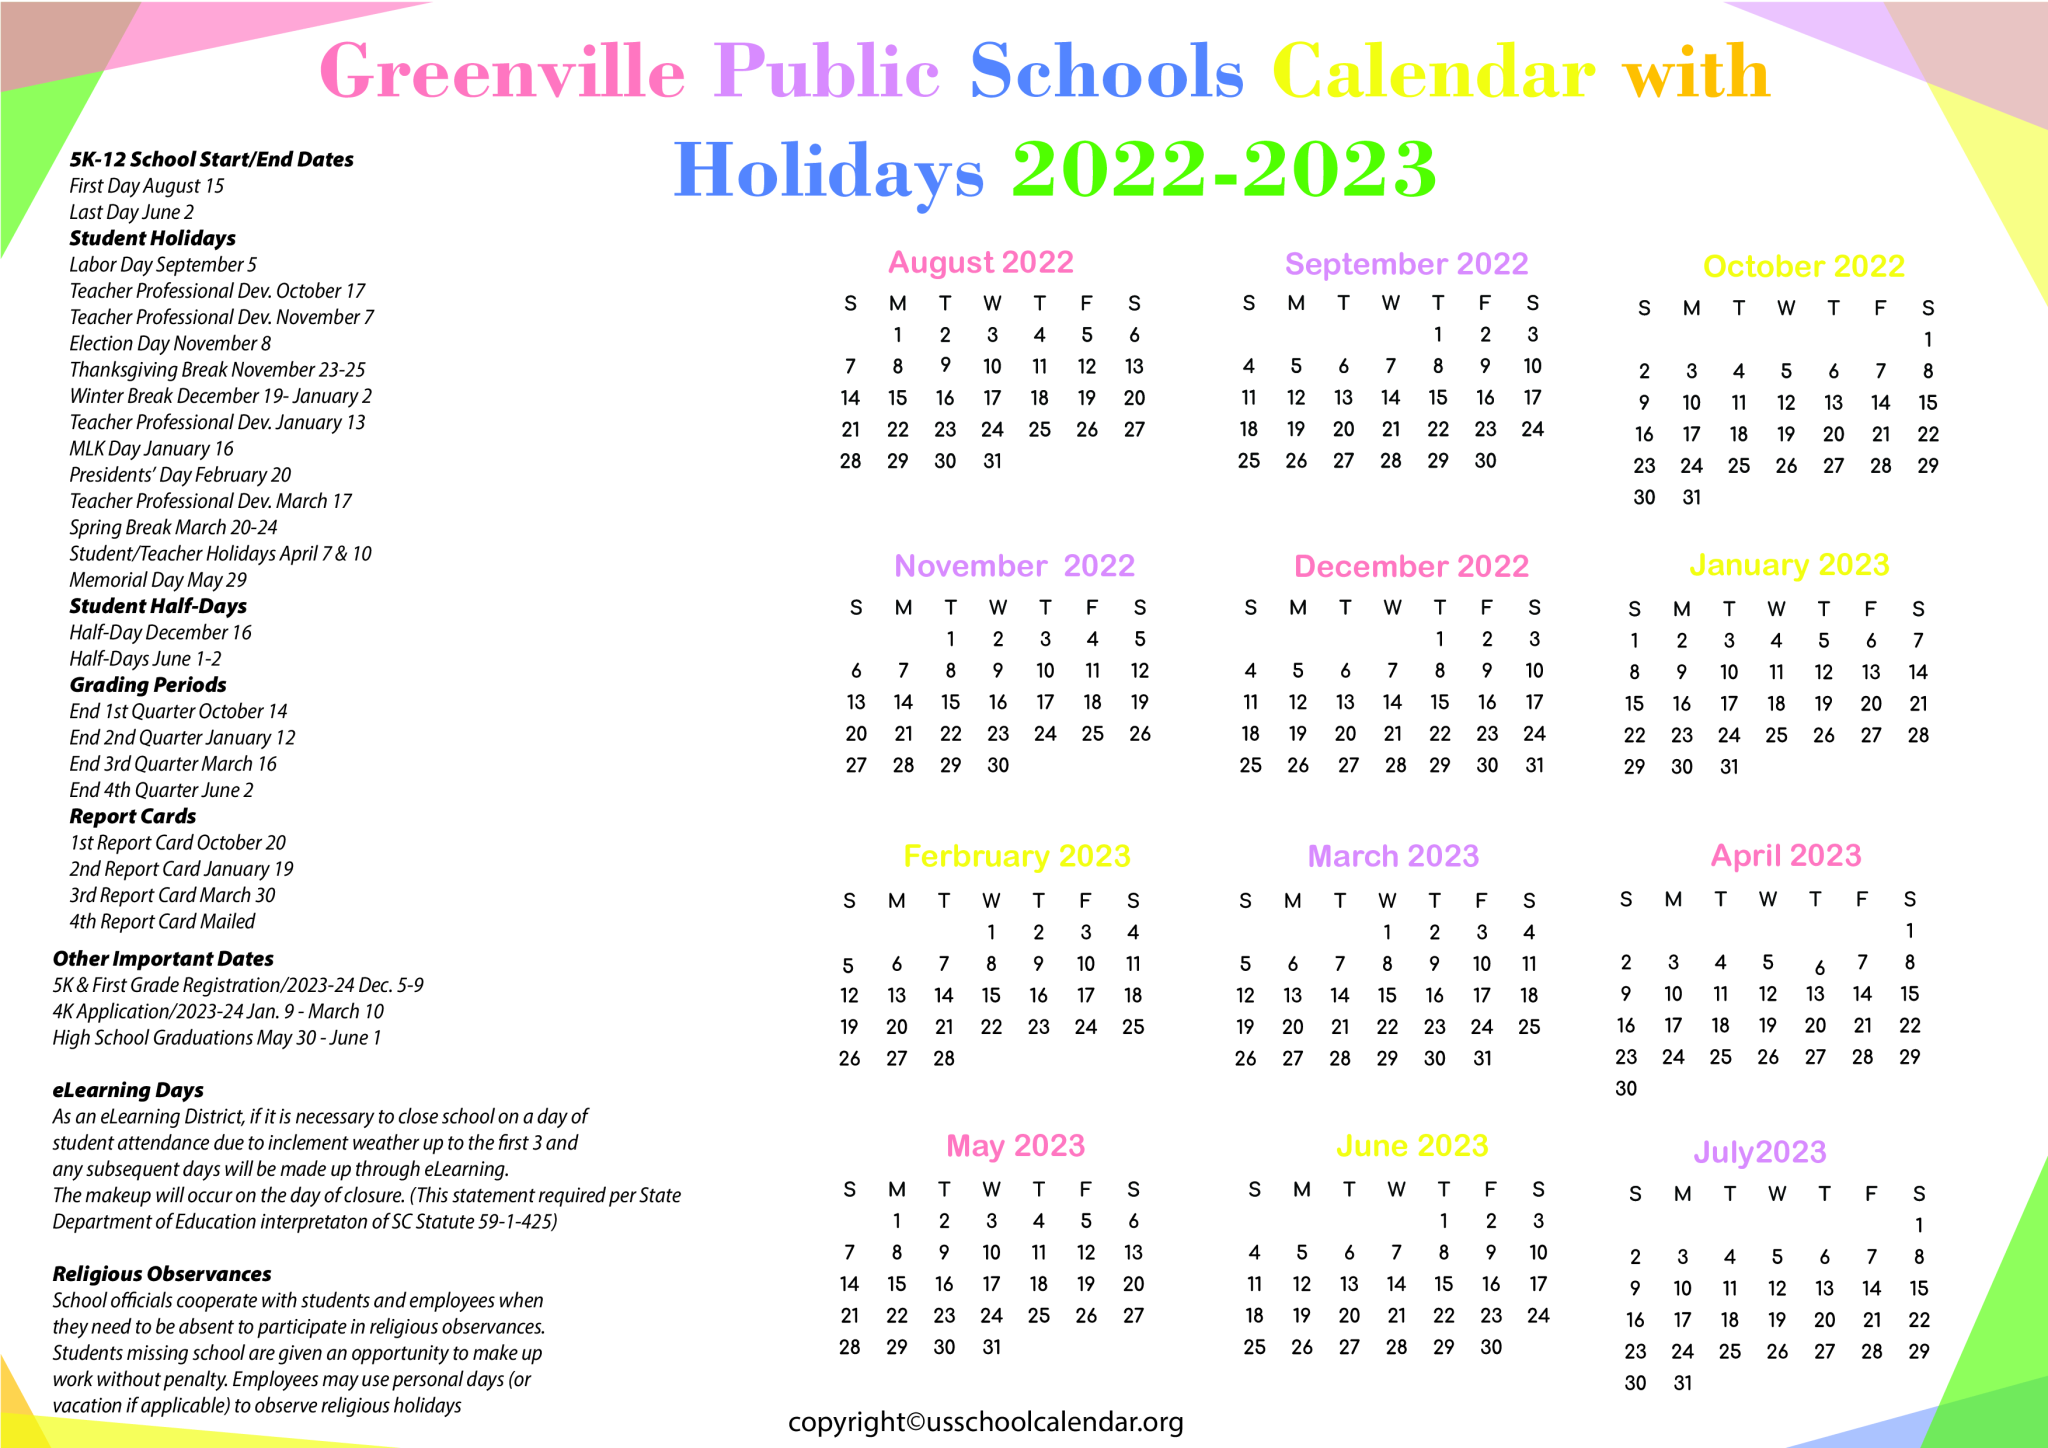 gps-greenville-public-schools-calendar-with-holidays-2023